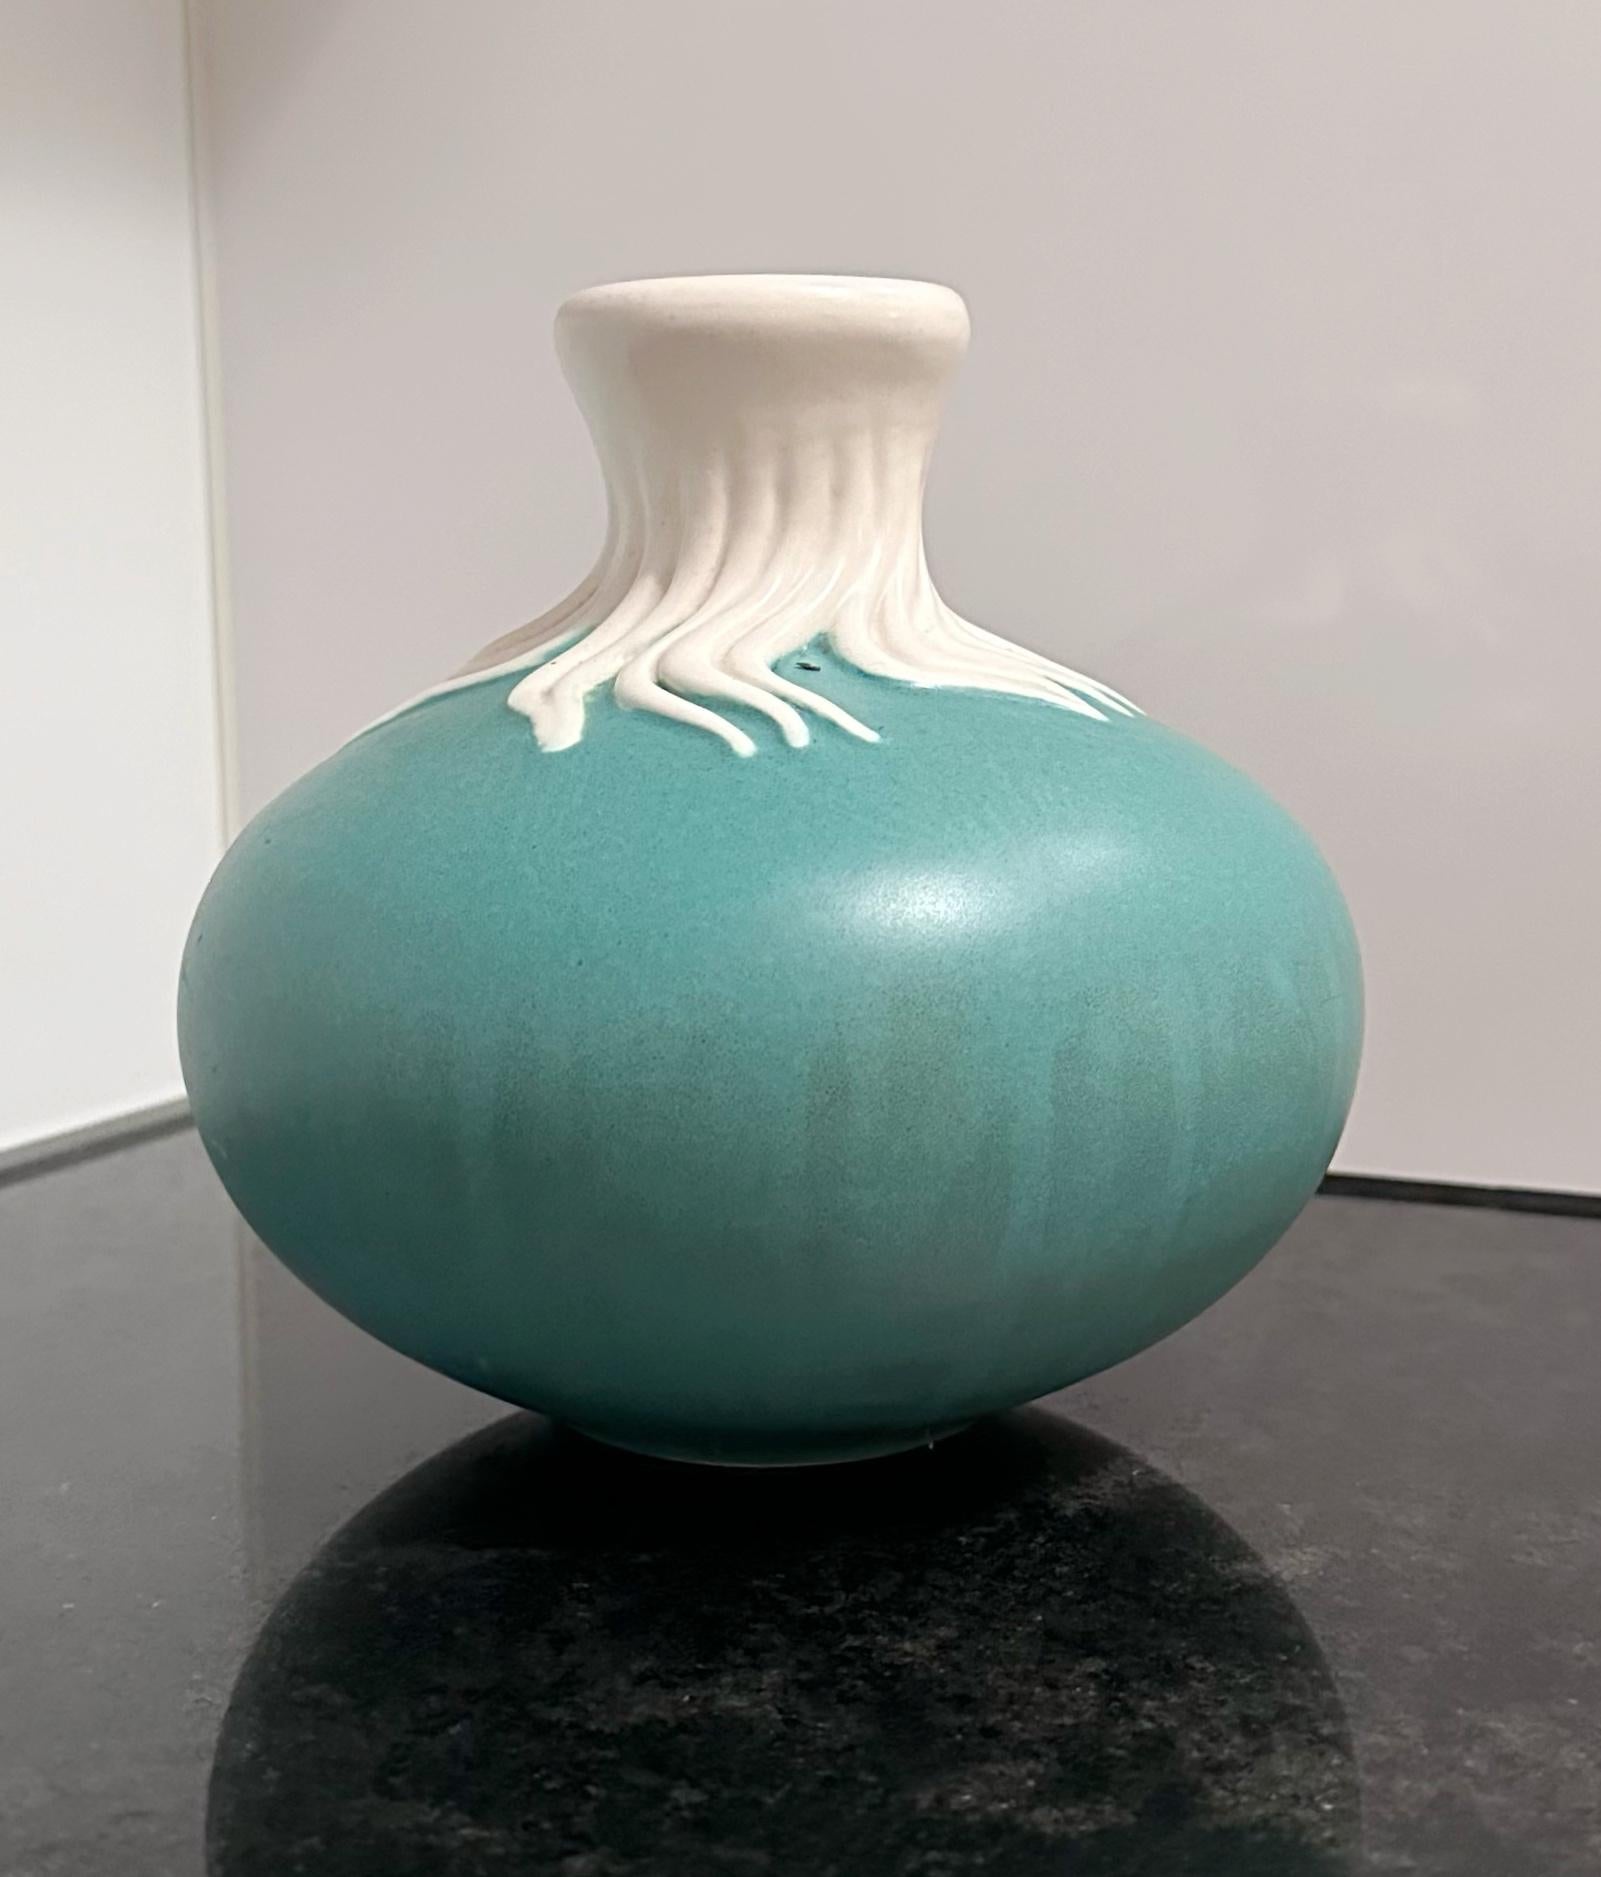 Giovanni Gariboldi
Vase bleu et blanc modèle 